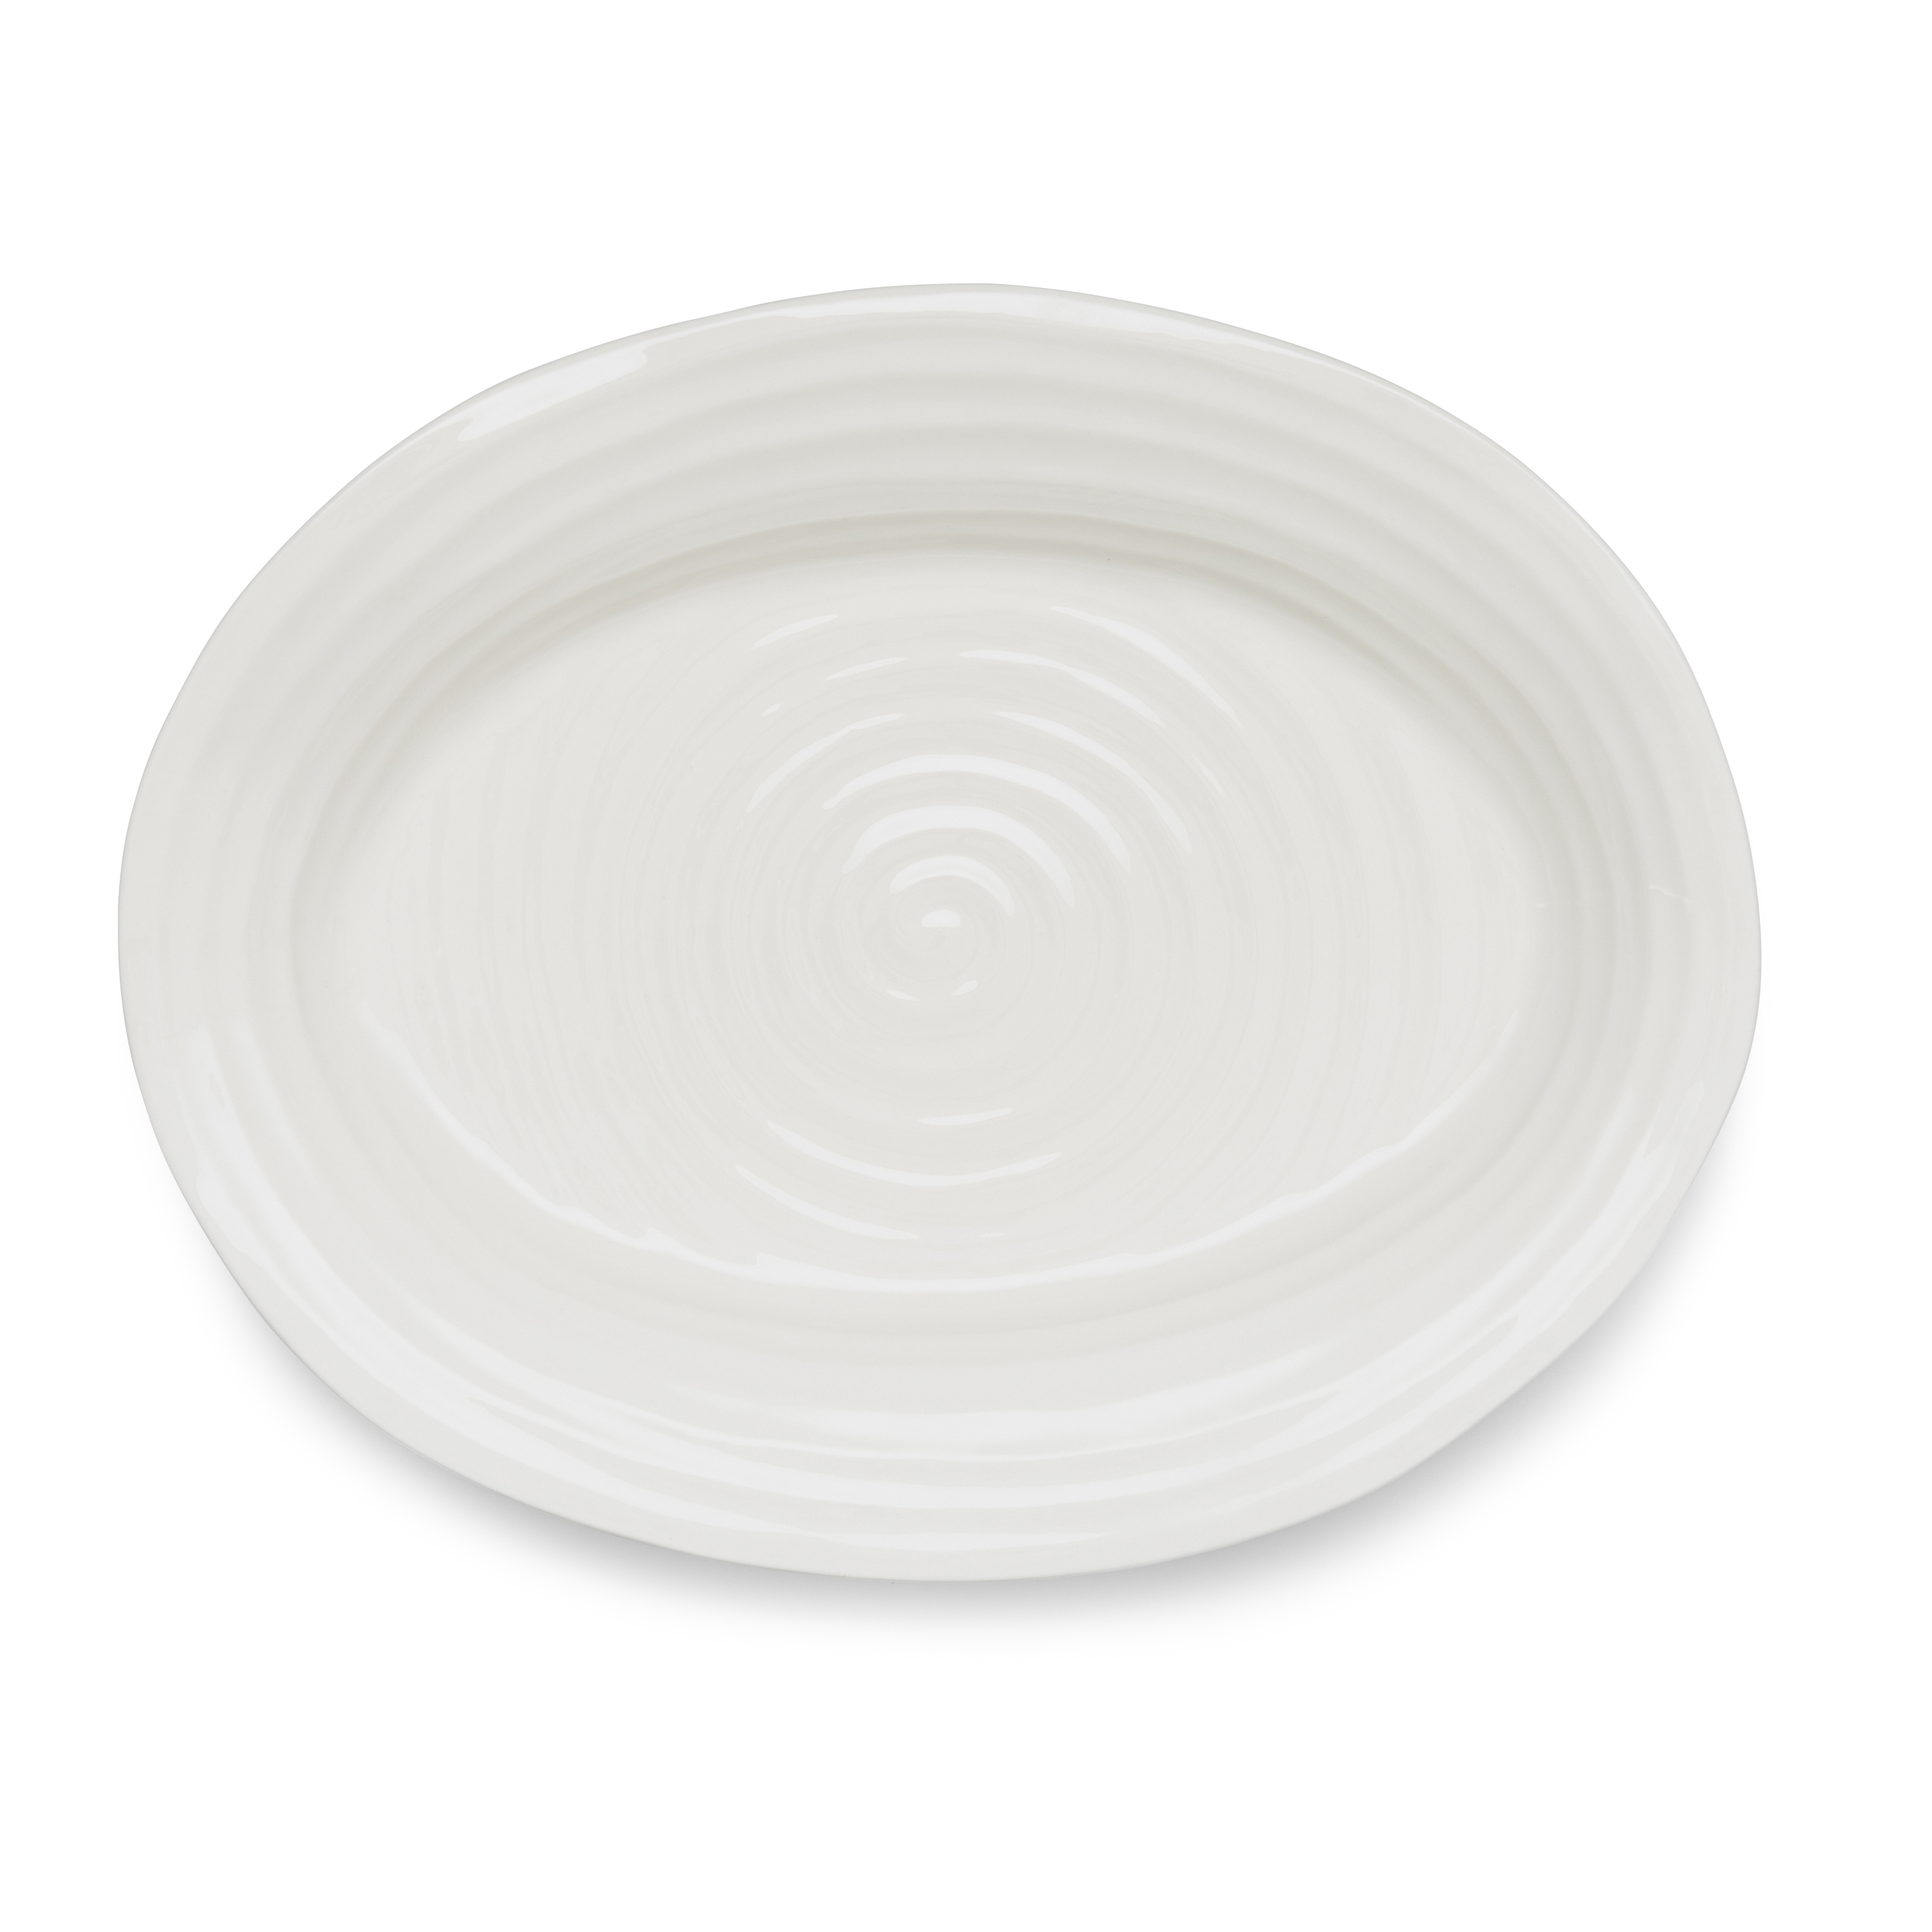 Sophie Conran White Medium Oval Platter image number null